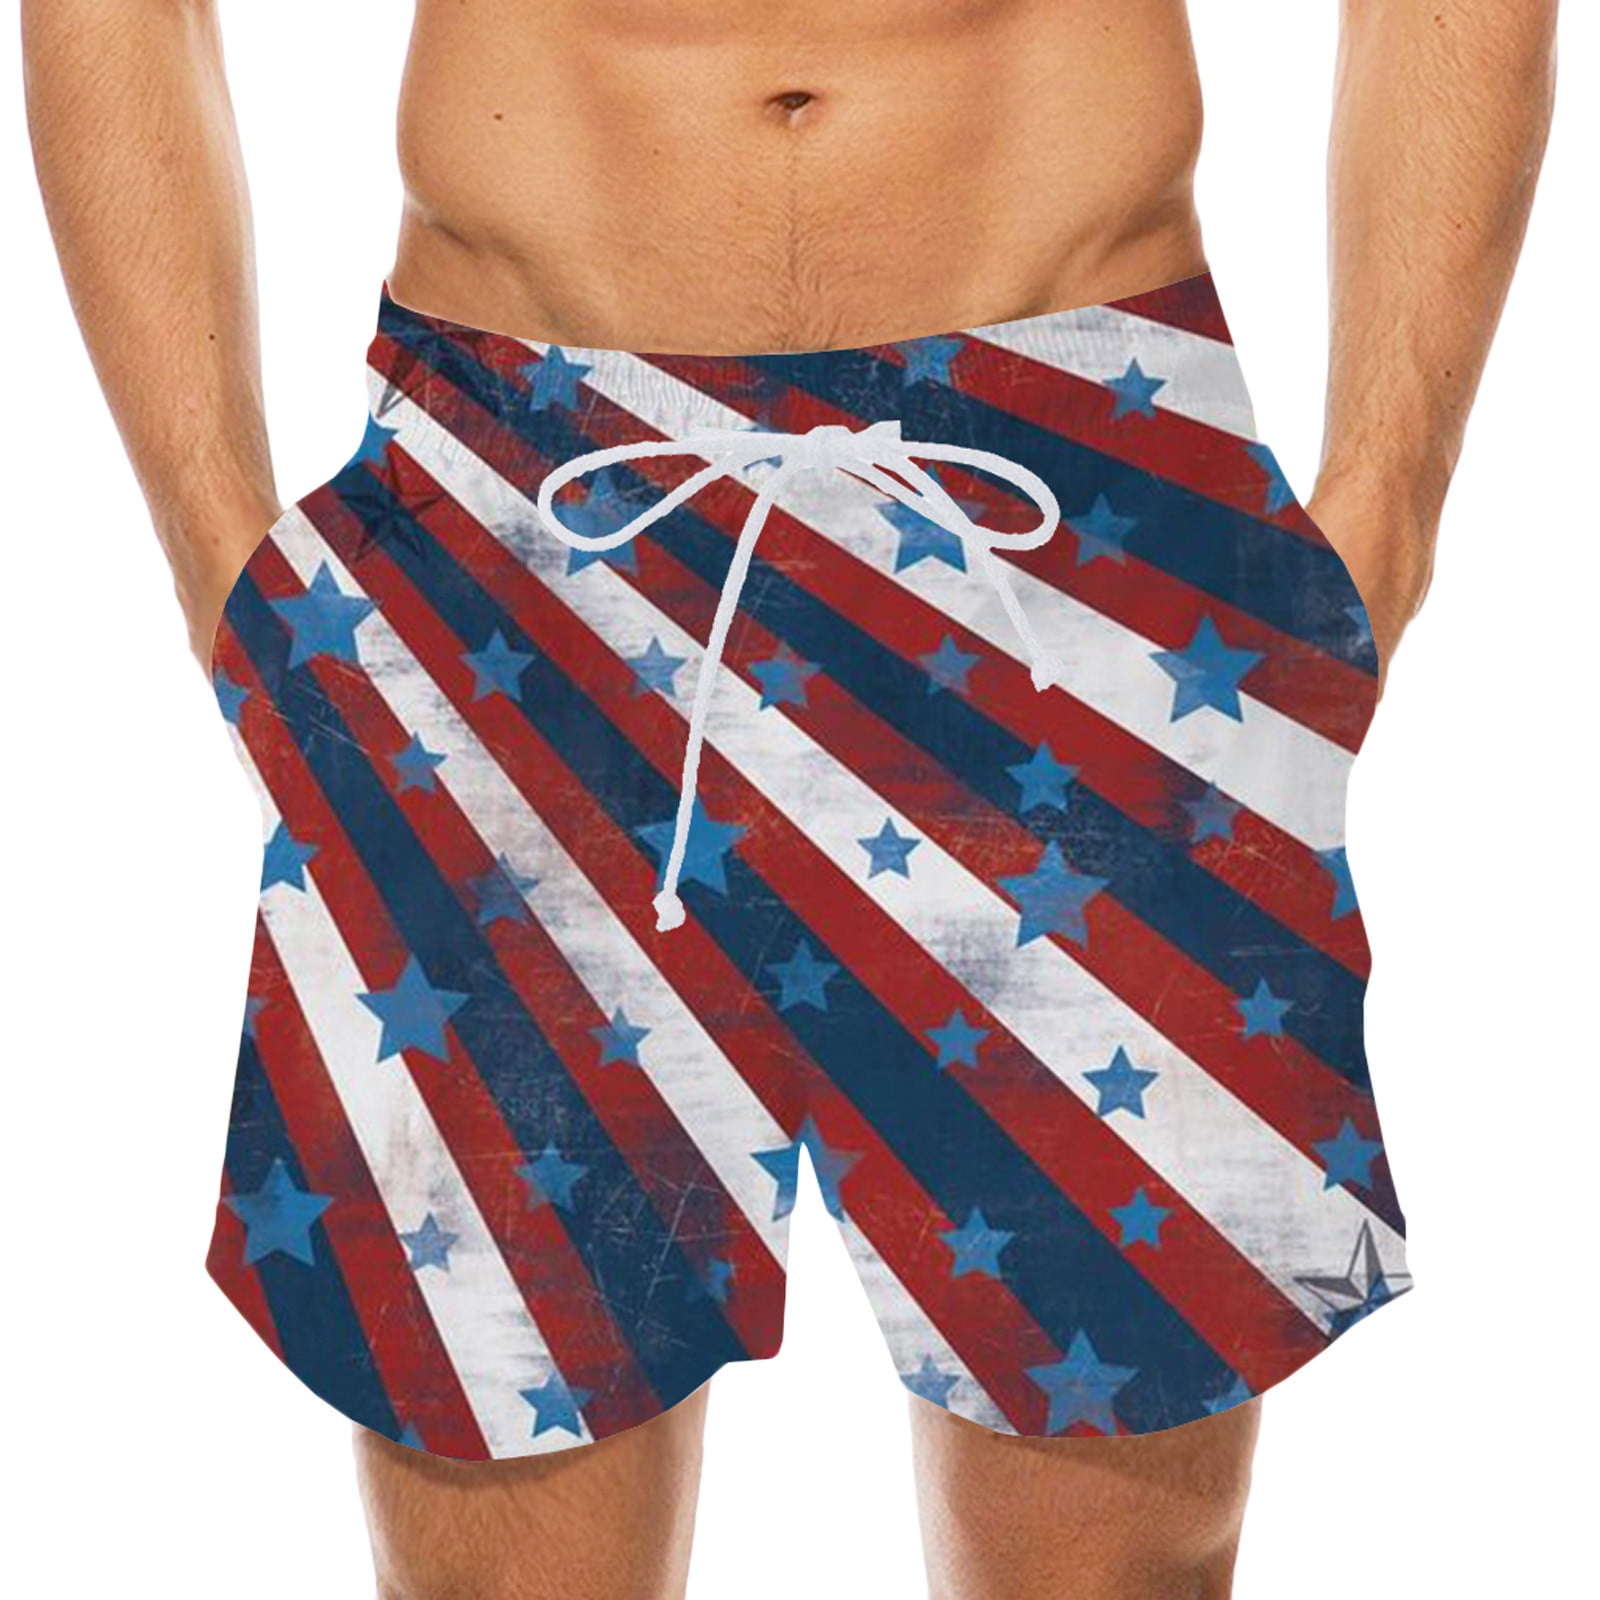 Xysaqa Men's Patriotic Shorts Swim Trunks American Flag Print Holiday ...